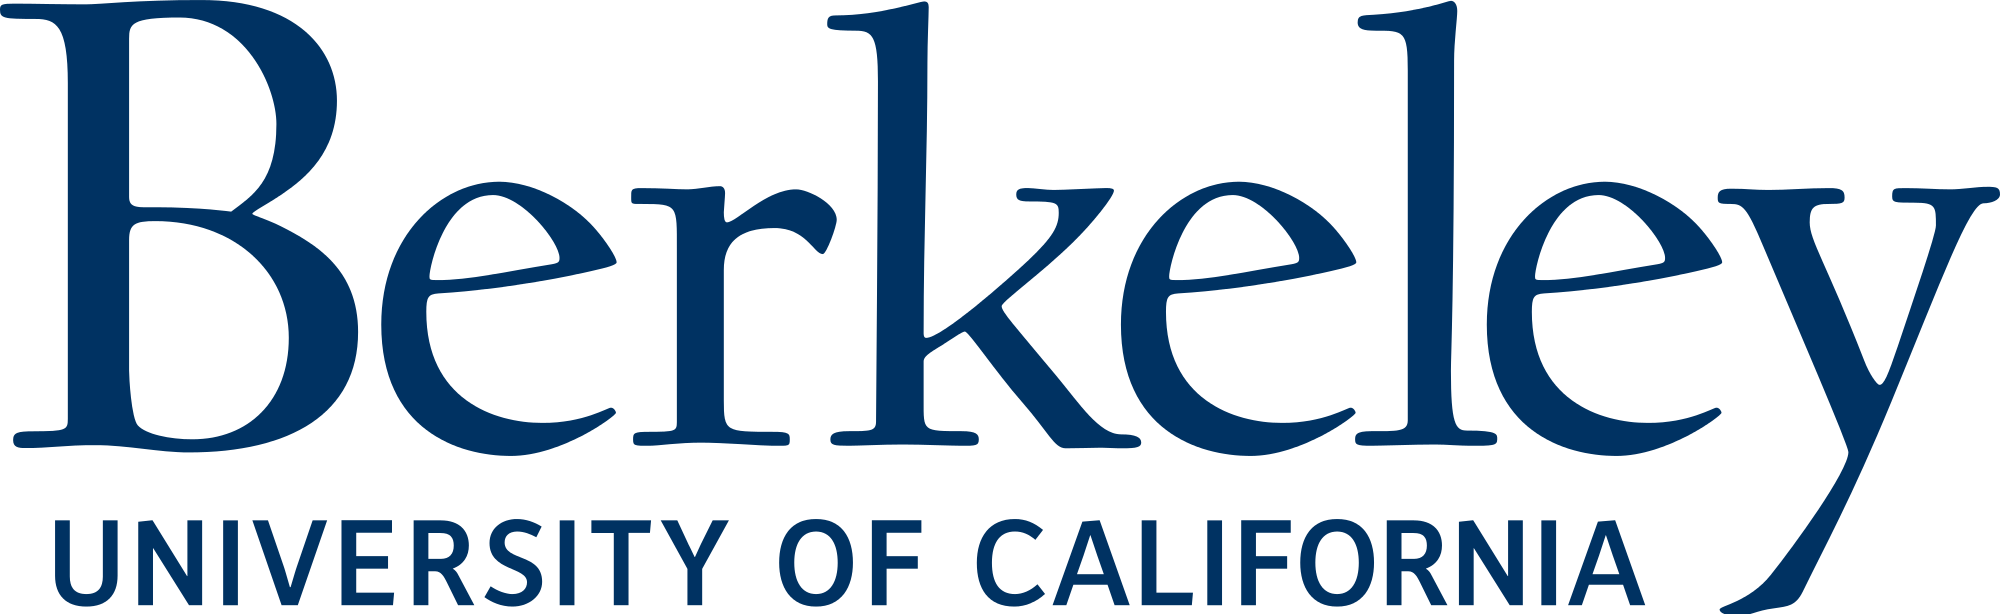 berkeley university of california